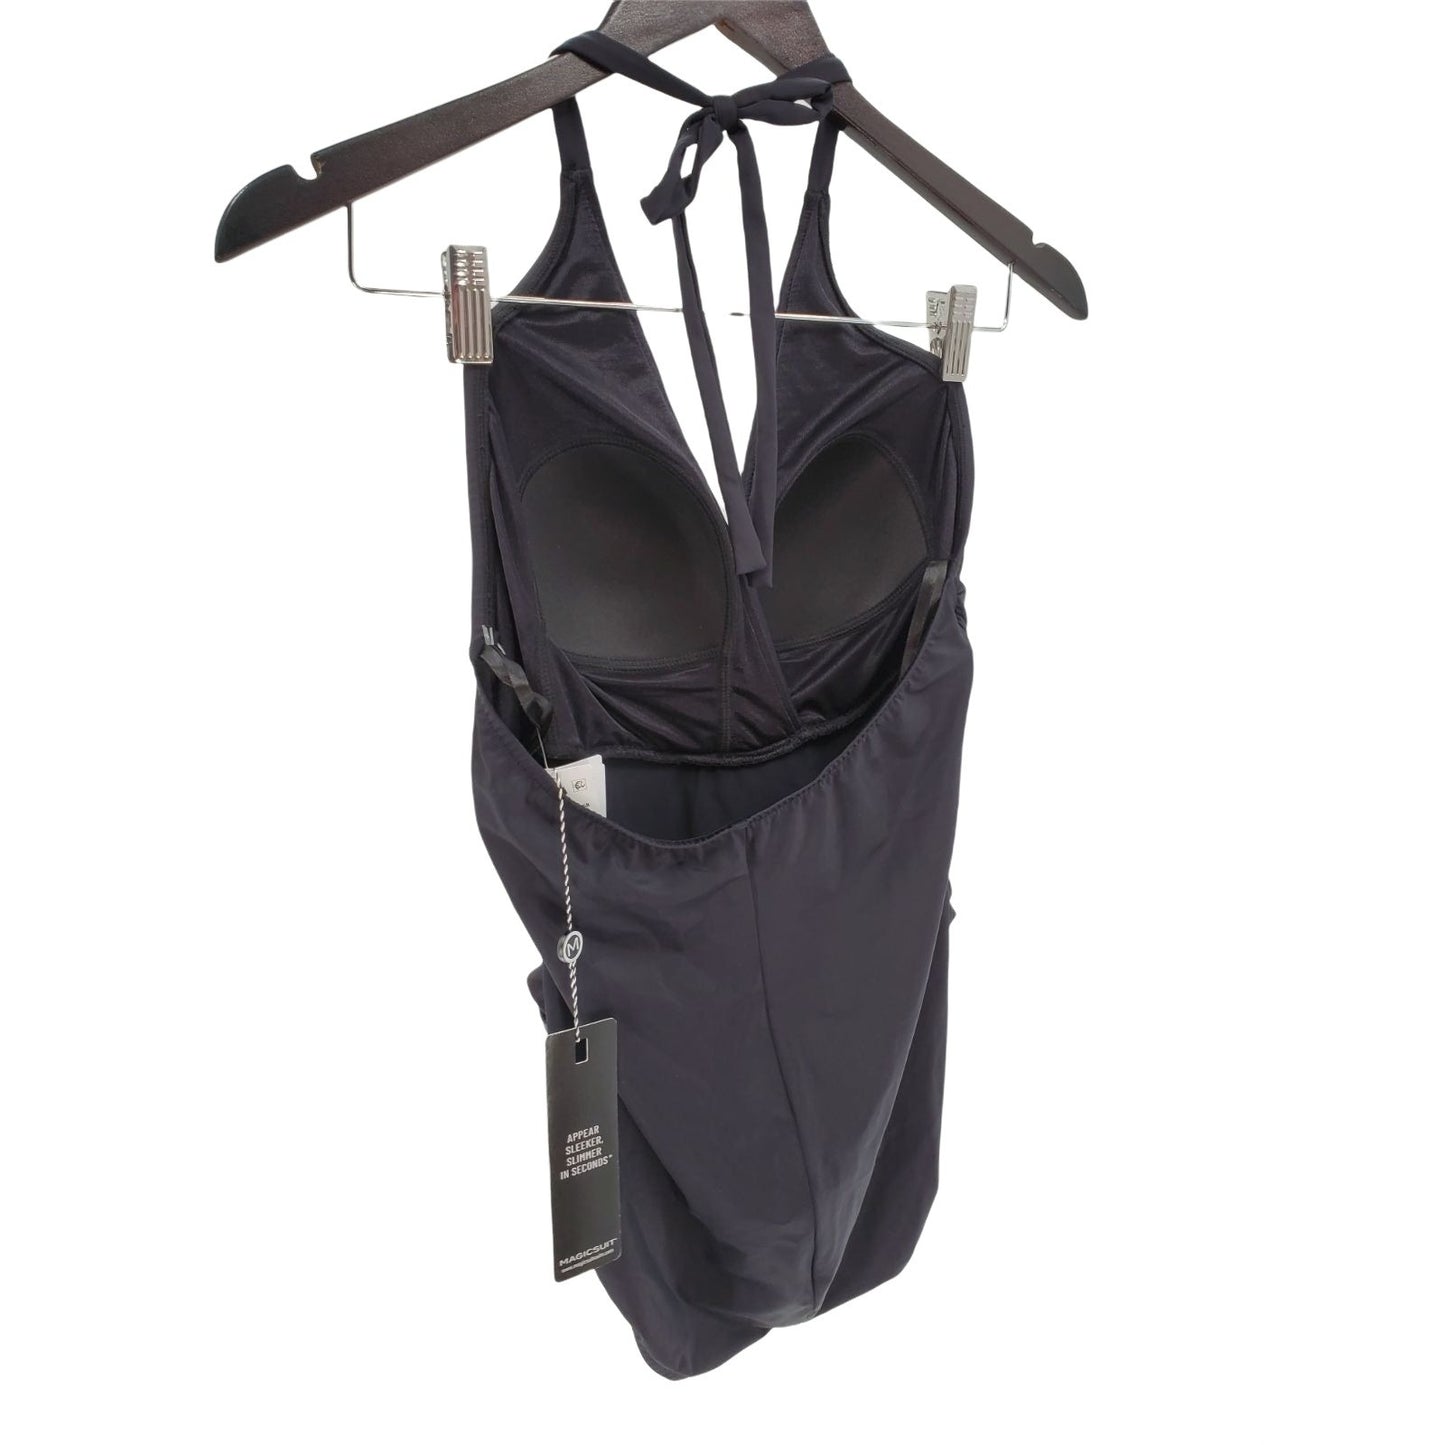 MAGICSUIT Swimwear Angelina Plunging V-neck Belted One-piece swimsuit